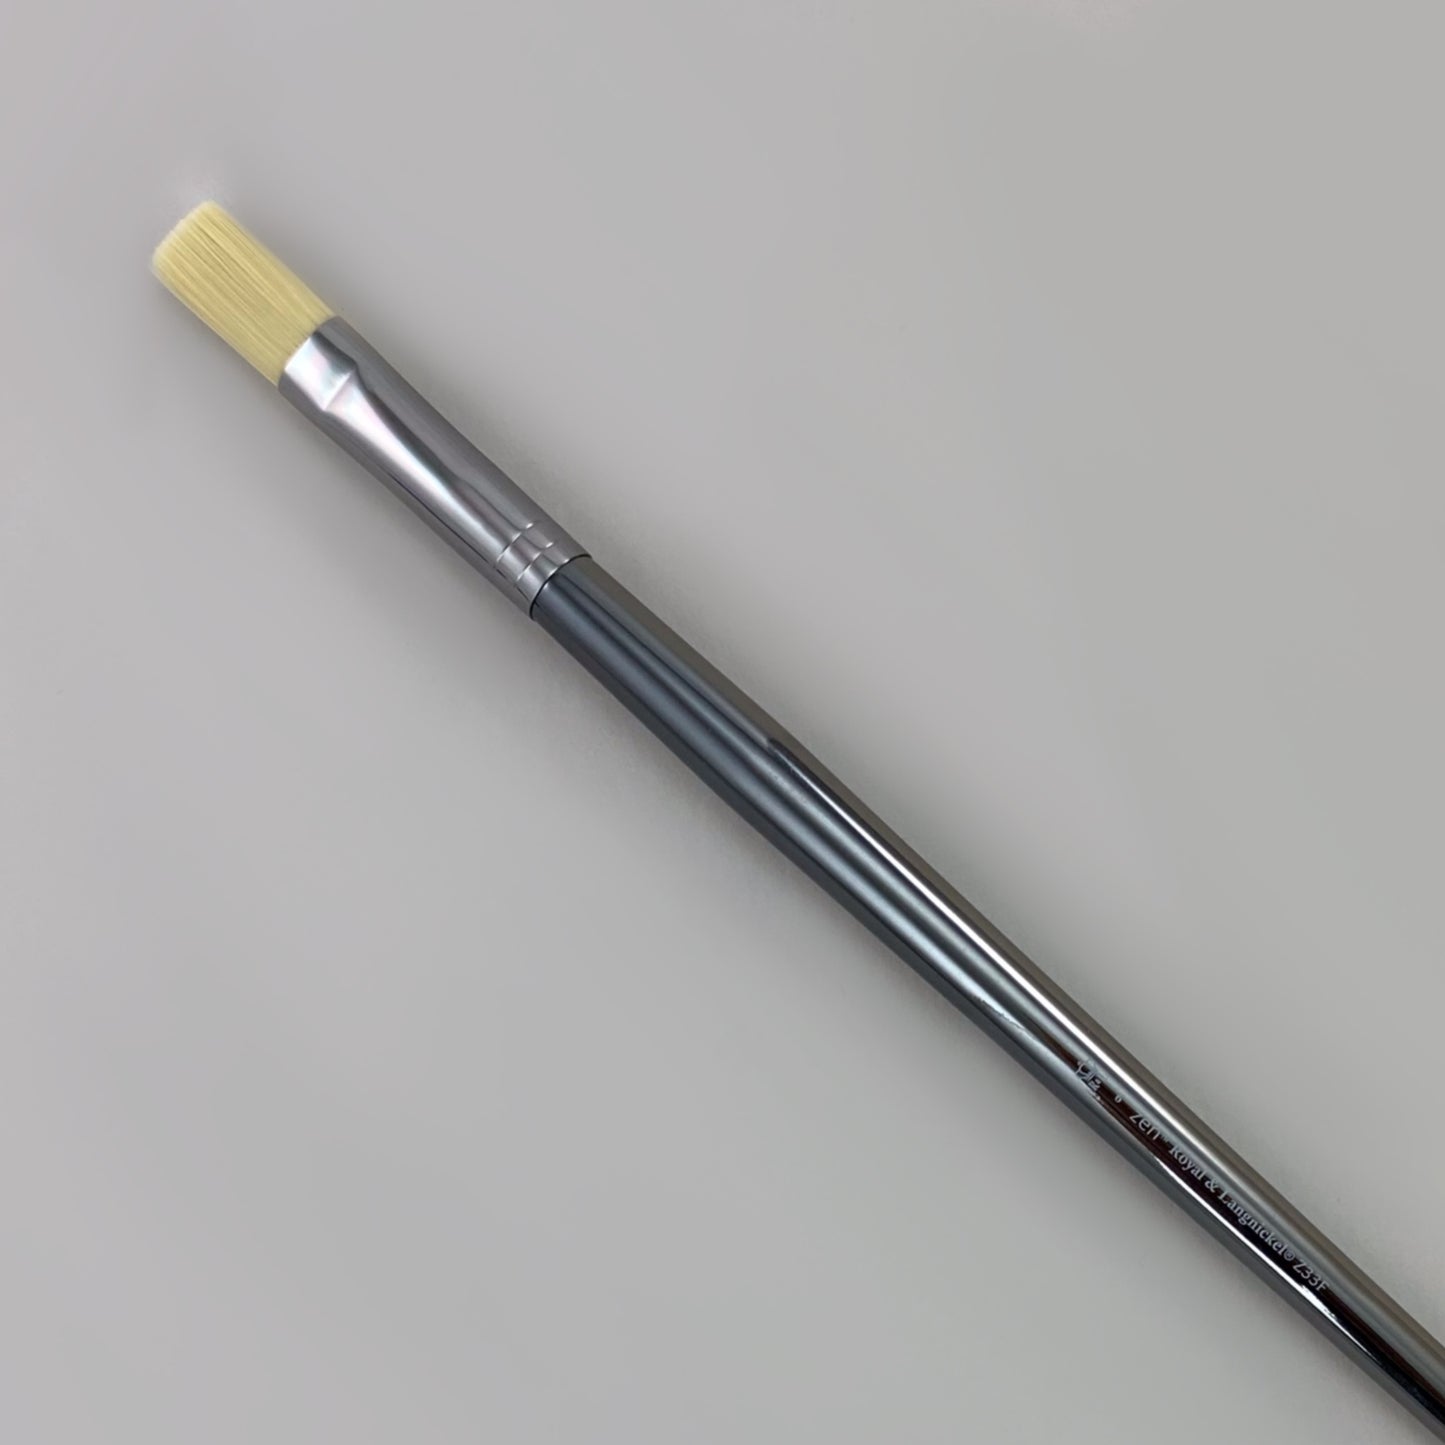 Royal & Langnickel Zen Series 33 Long Handle Brushes - Flat / - #6 by Royal & Langnickel - K. A. Artist Shop